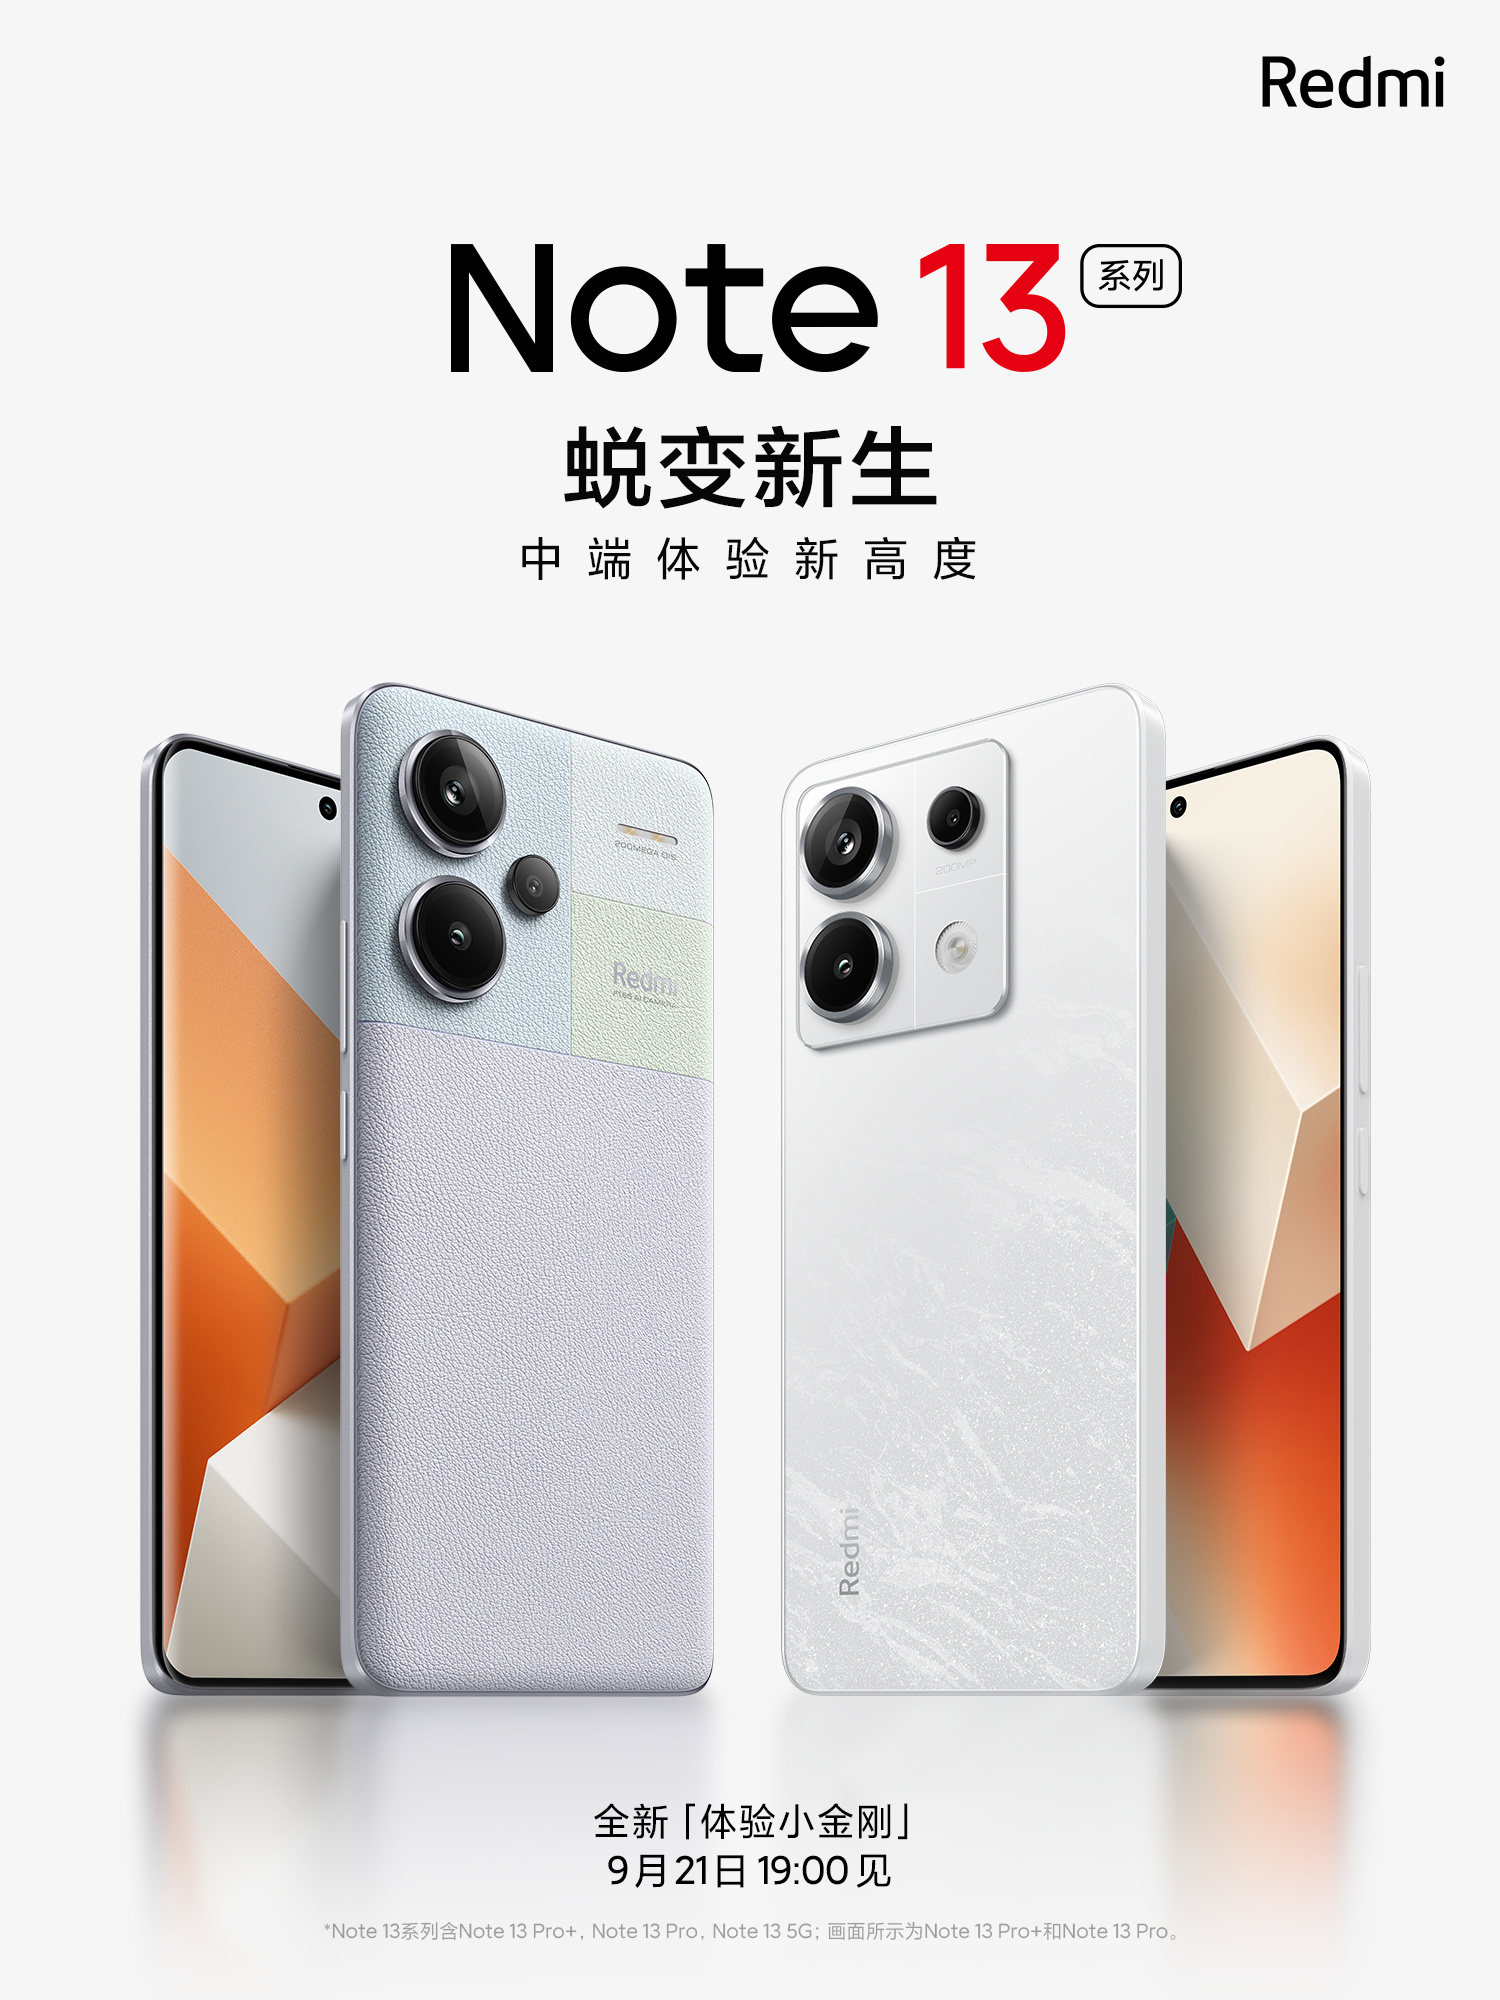 Xiaomi Redmi Note 13 5G, Redmi Note 13 Pro 5G y Redmi Note 13 Pro